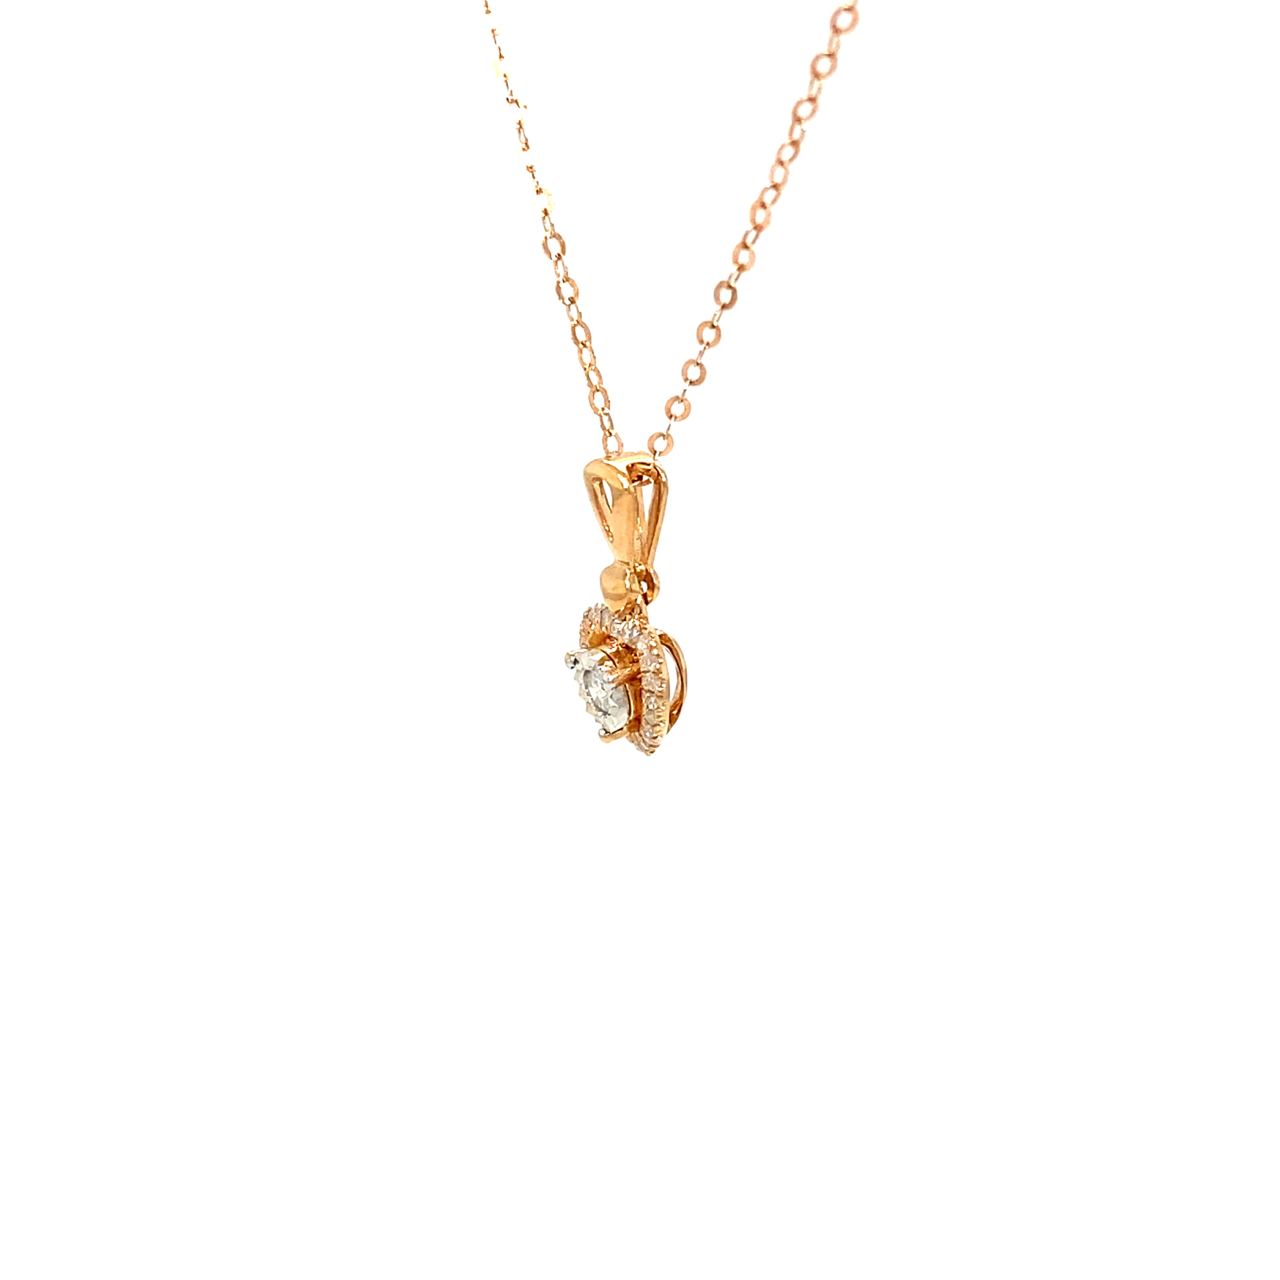 18K Rose Gold Illusion Setting Heart Diamond Necklace